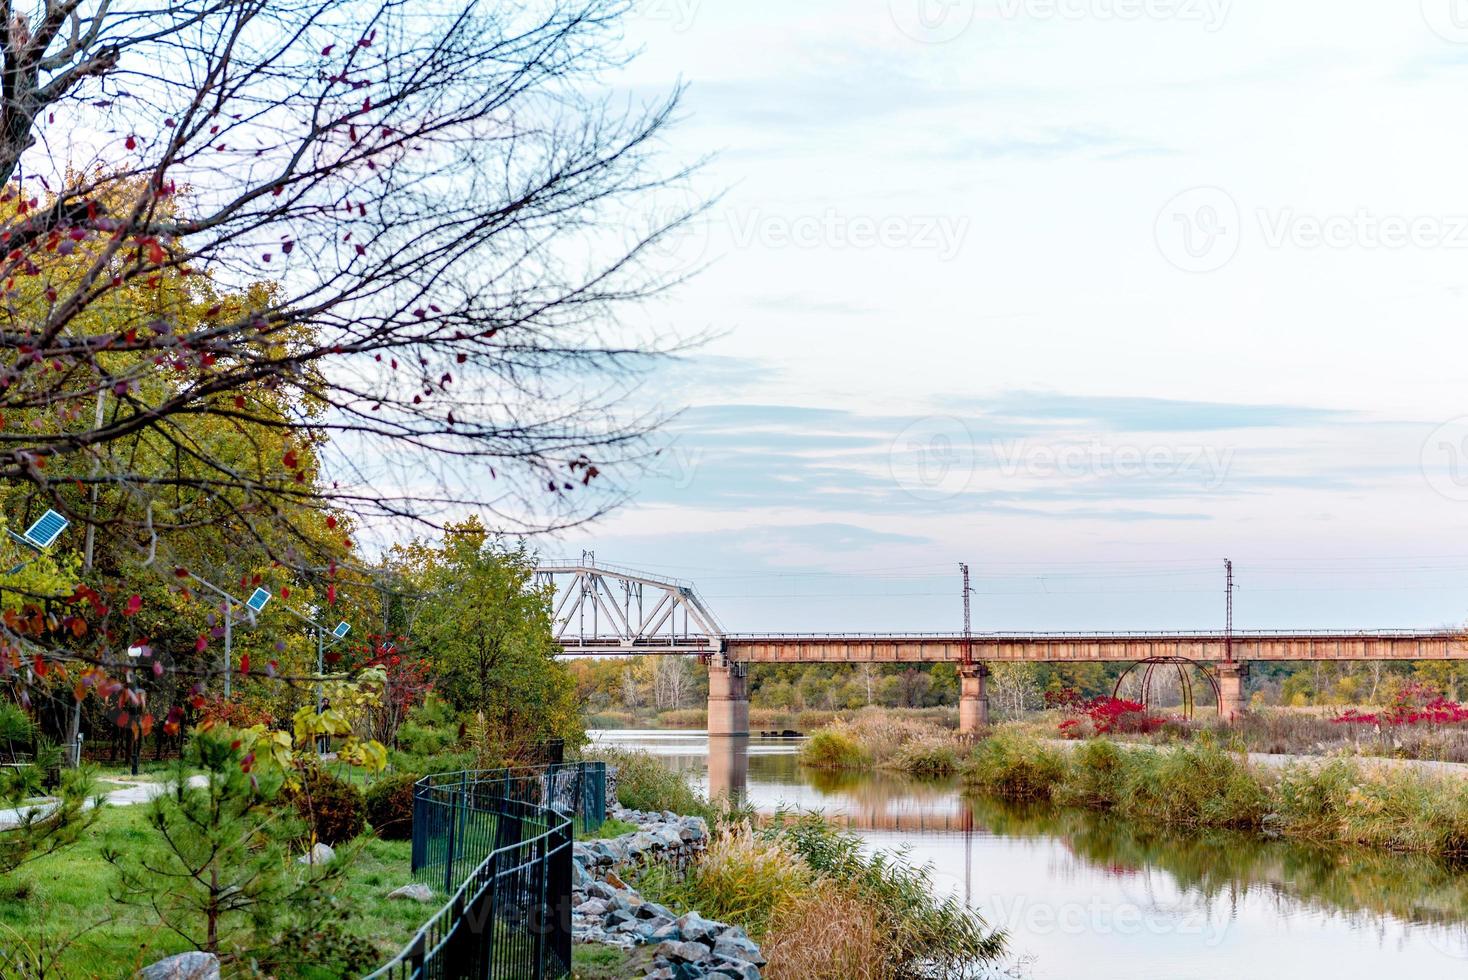 A metal railway bridge connecting two river banks photo